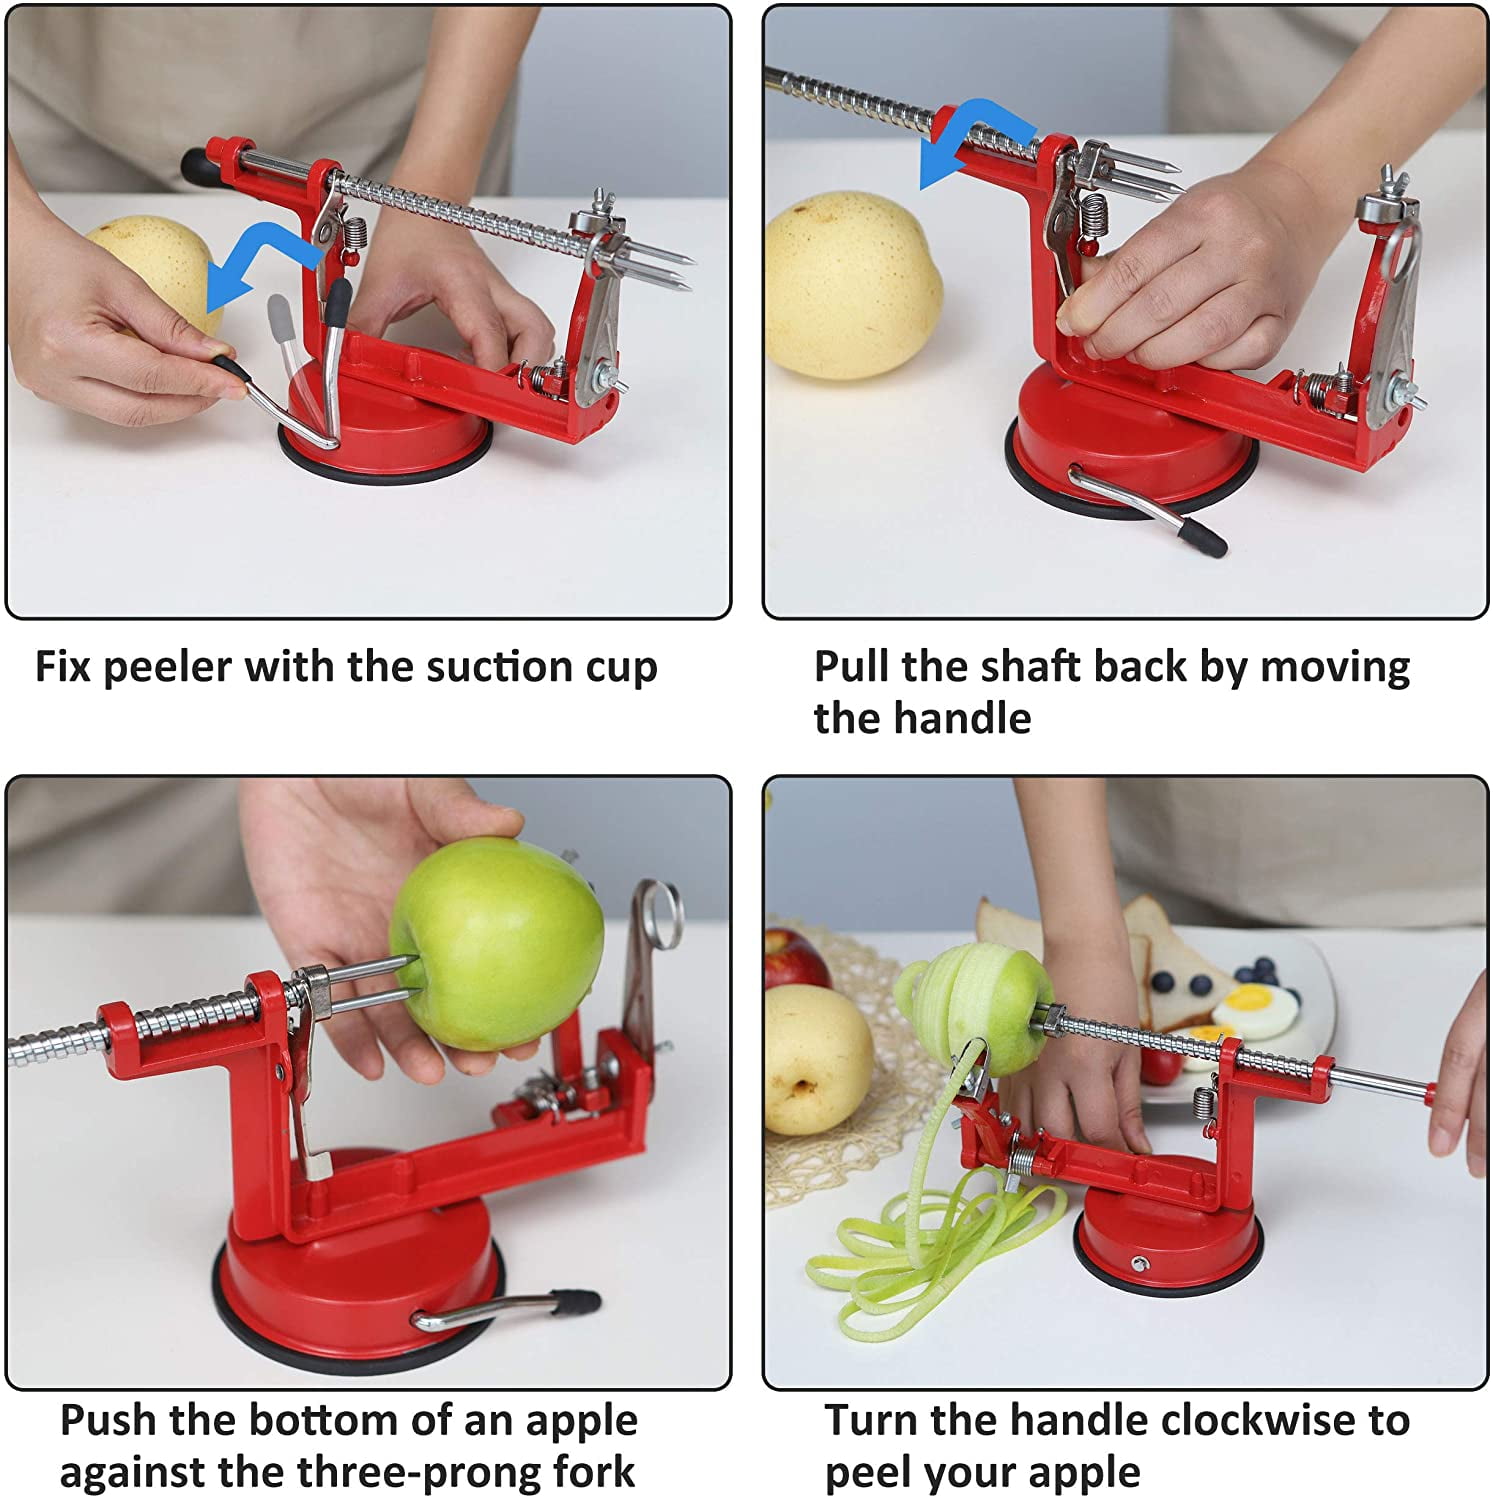 3In 1 Apple Peeler Manual Rotation Potato Fruit Core Slicer Kitchen Hand  Cracking Corer, 1 Pack - Kroger